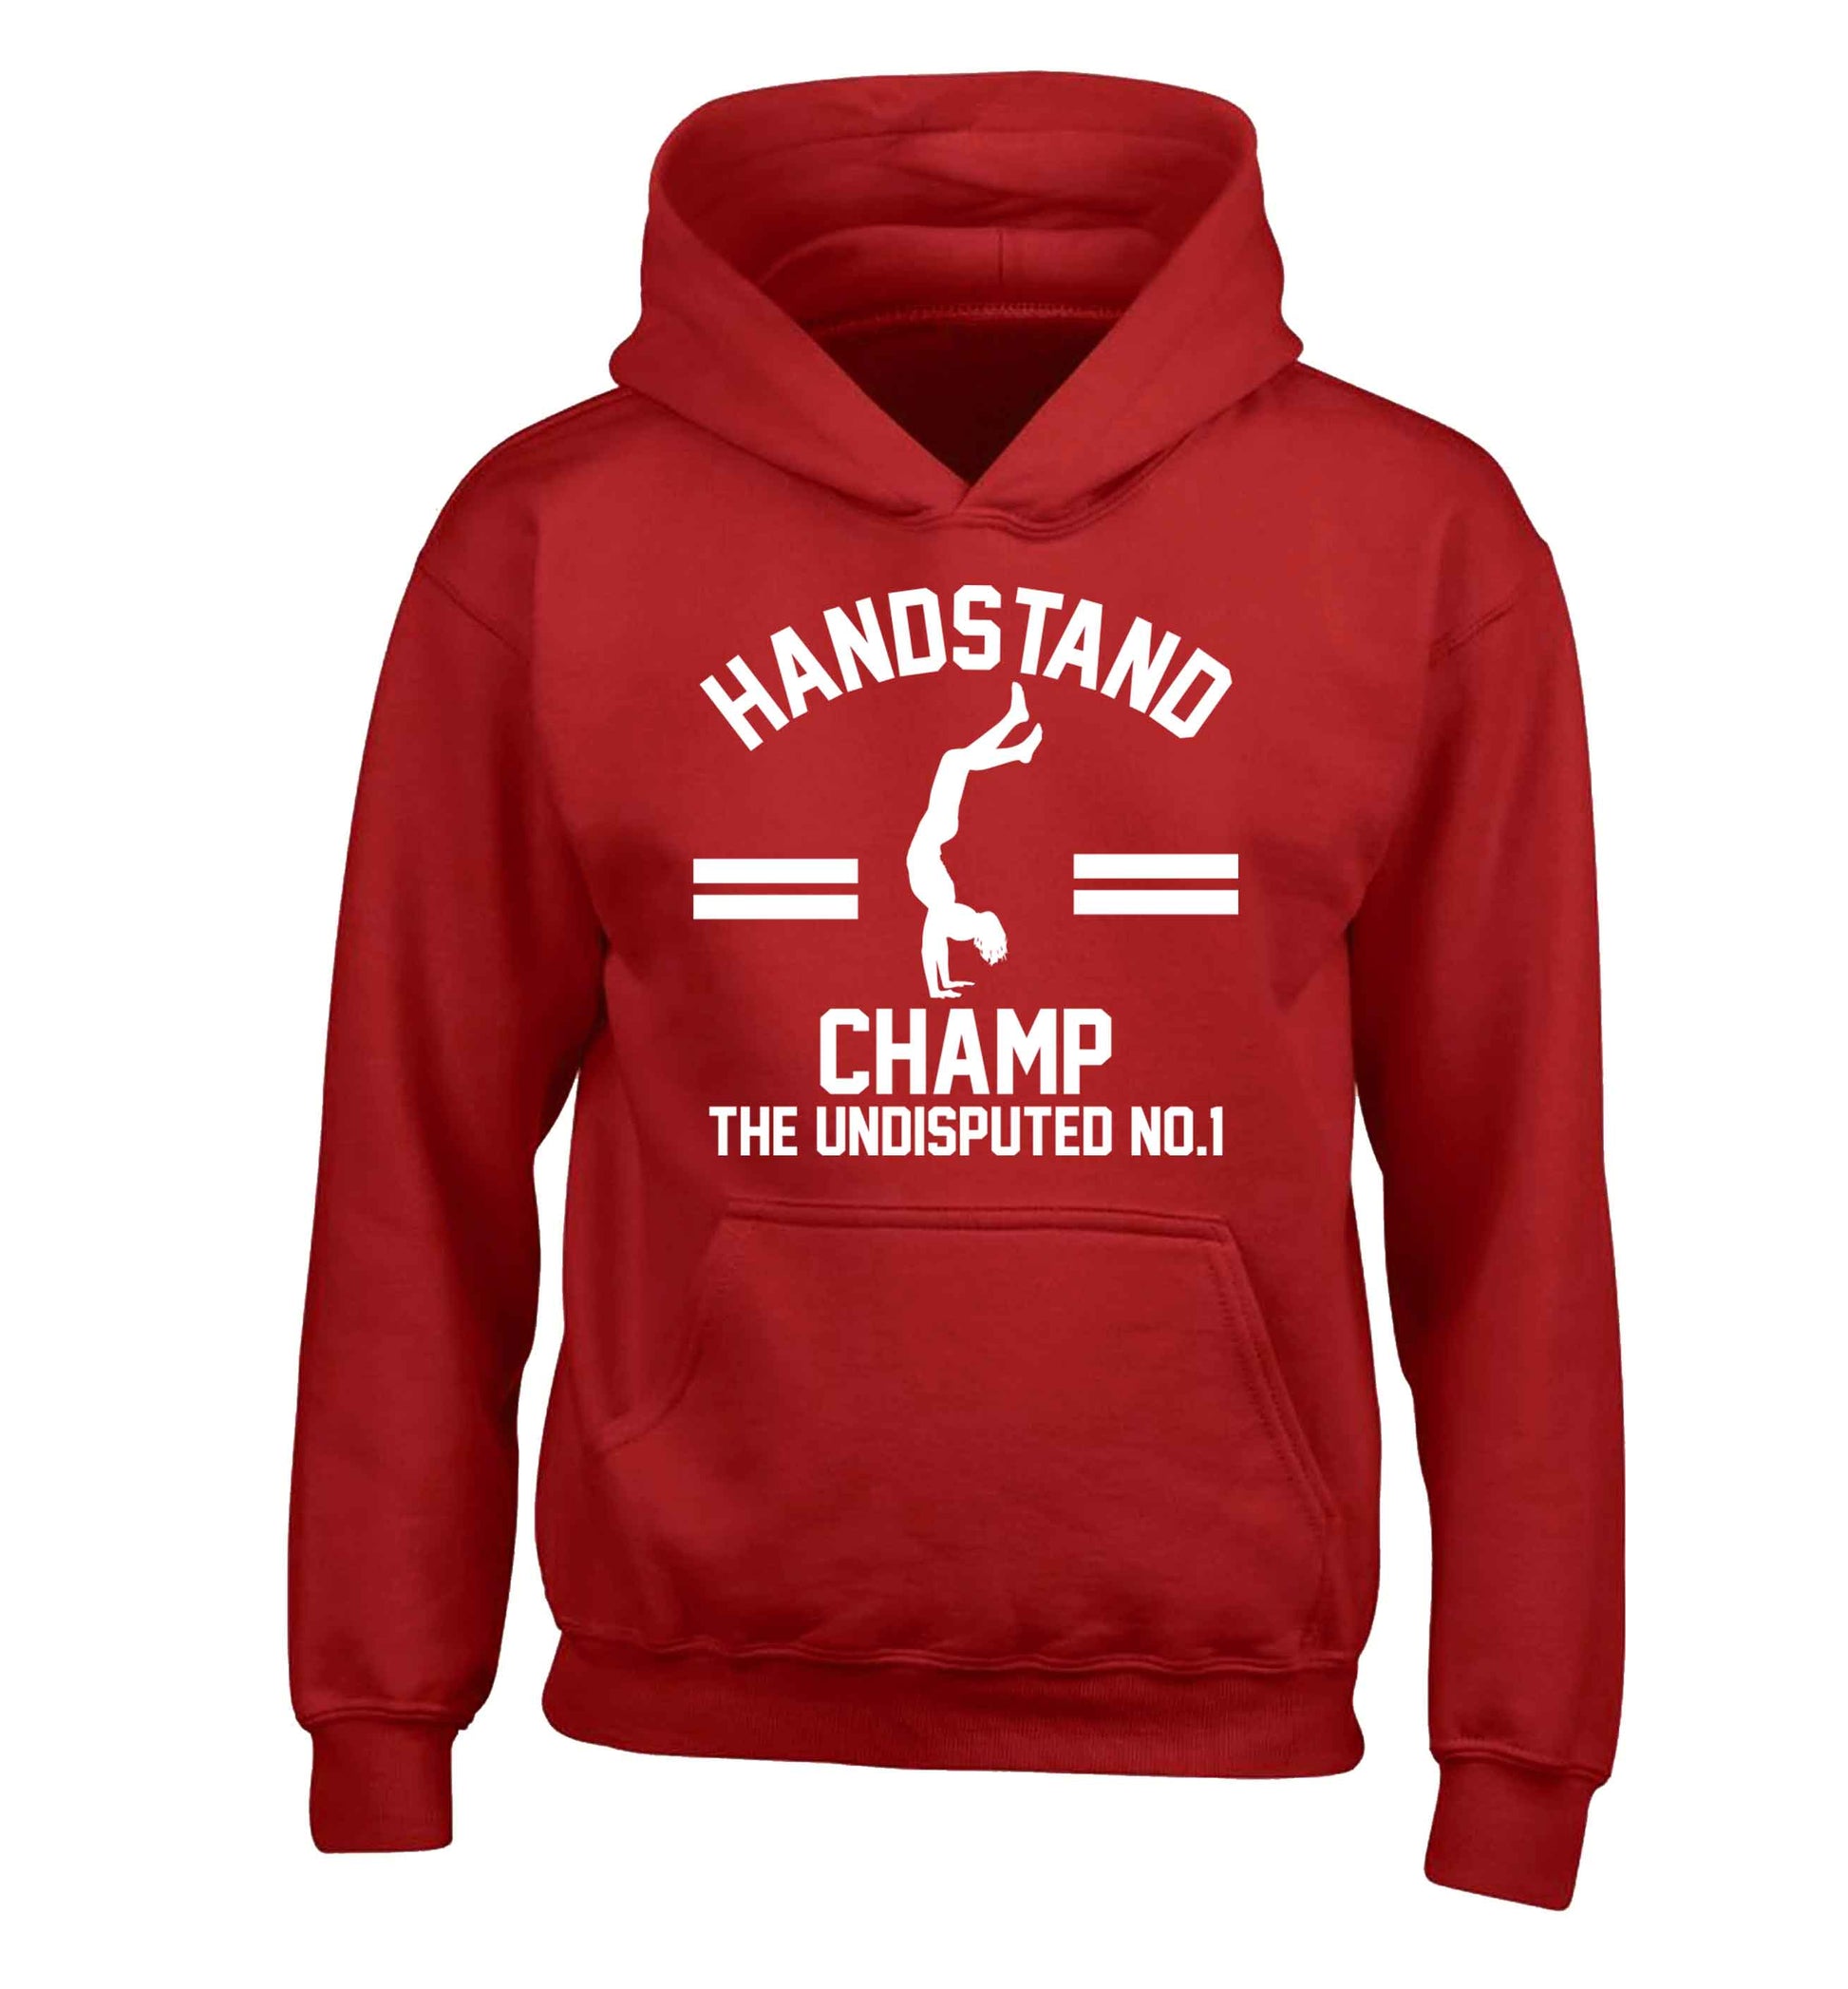 Undisputed handstand championship no.1  children's red hoodie 12-13 Years